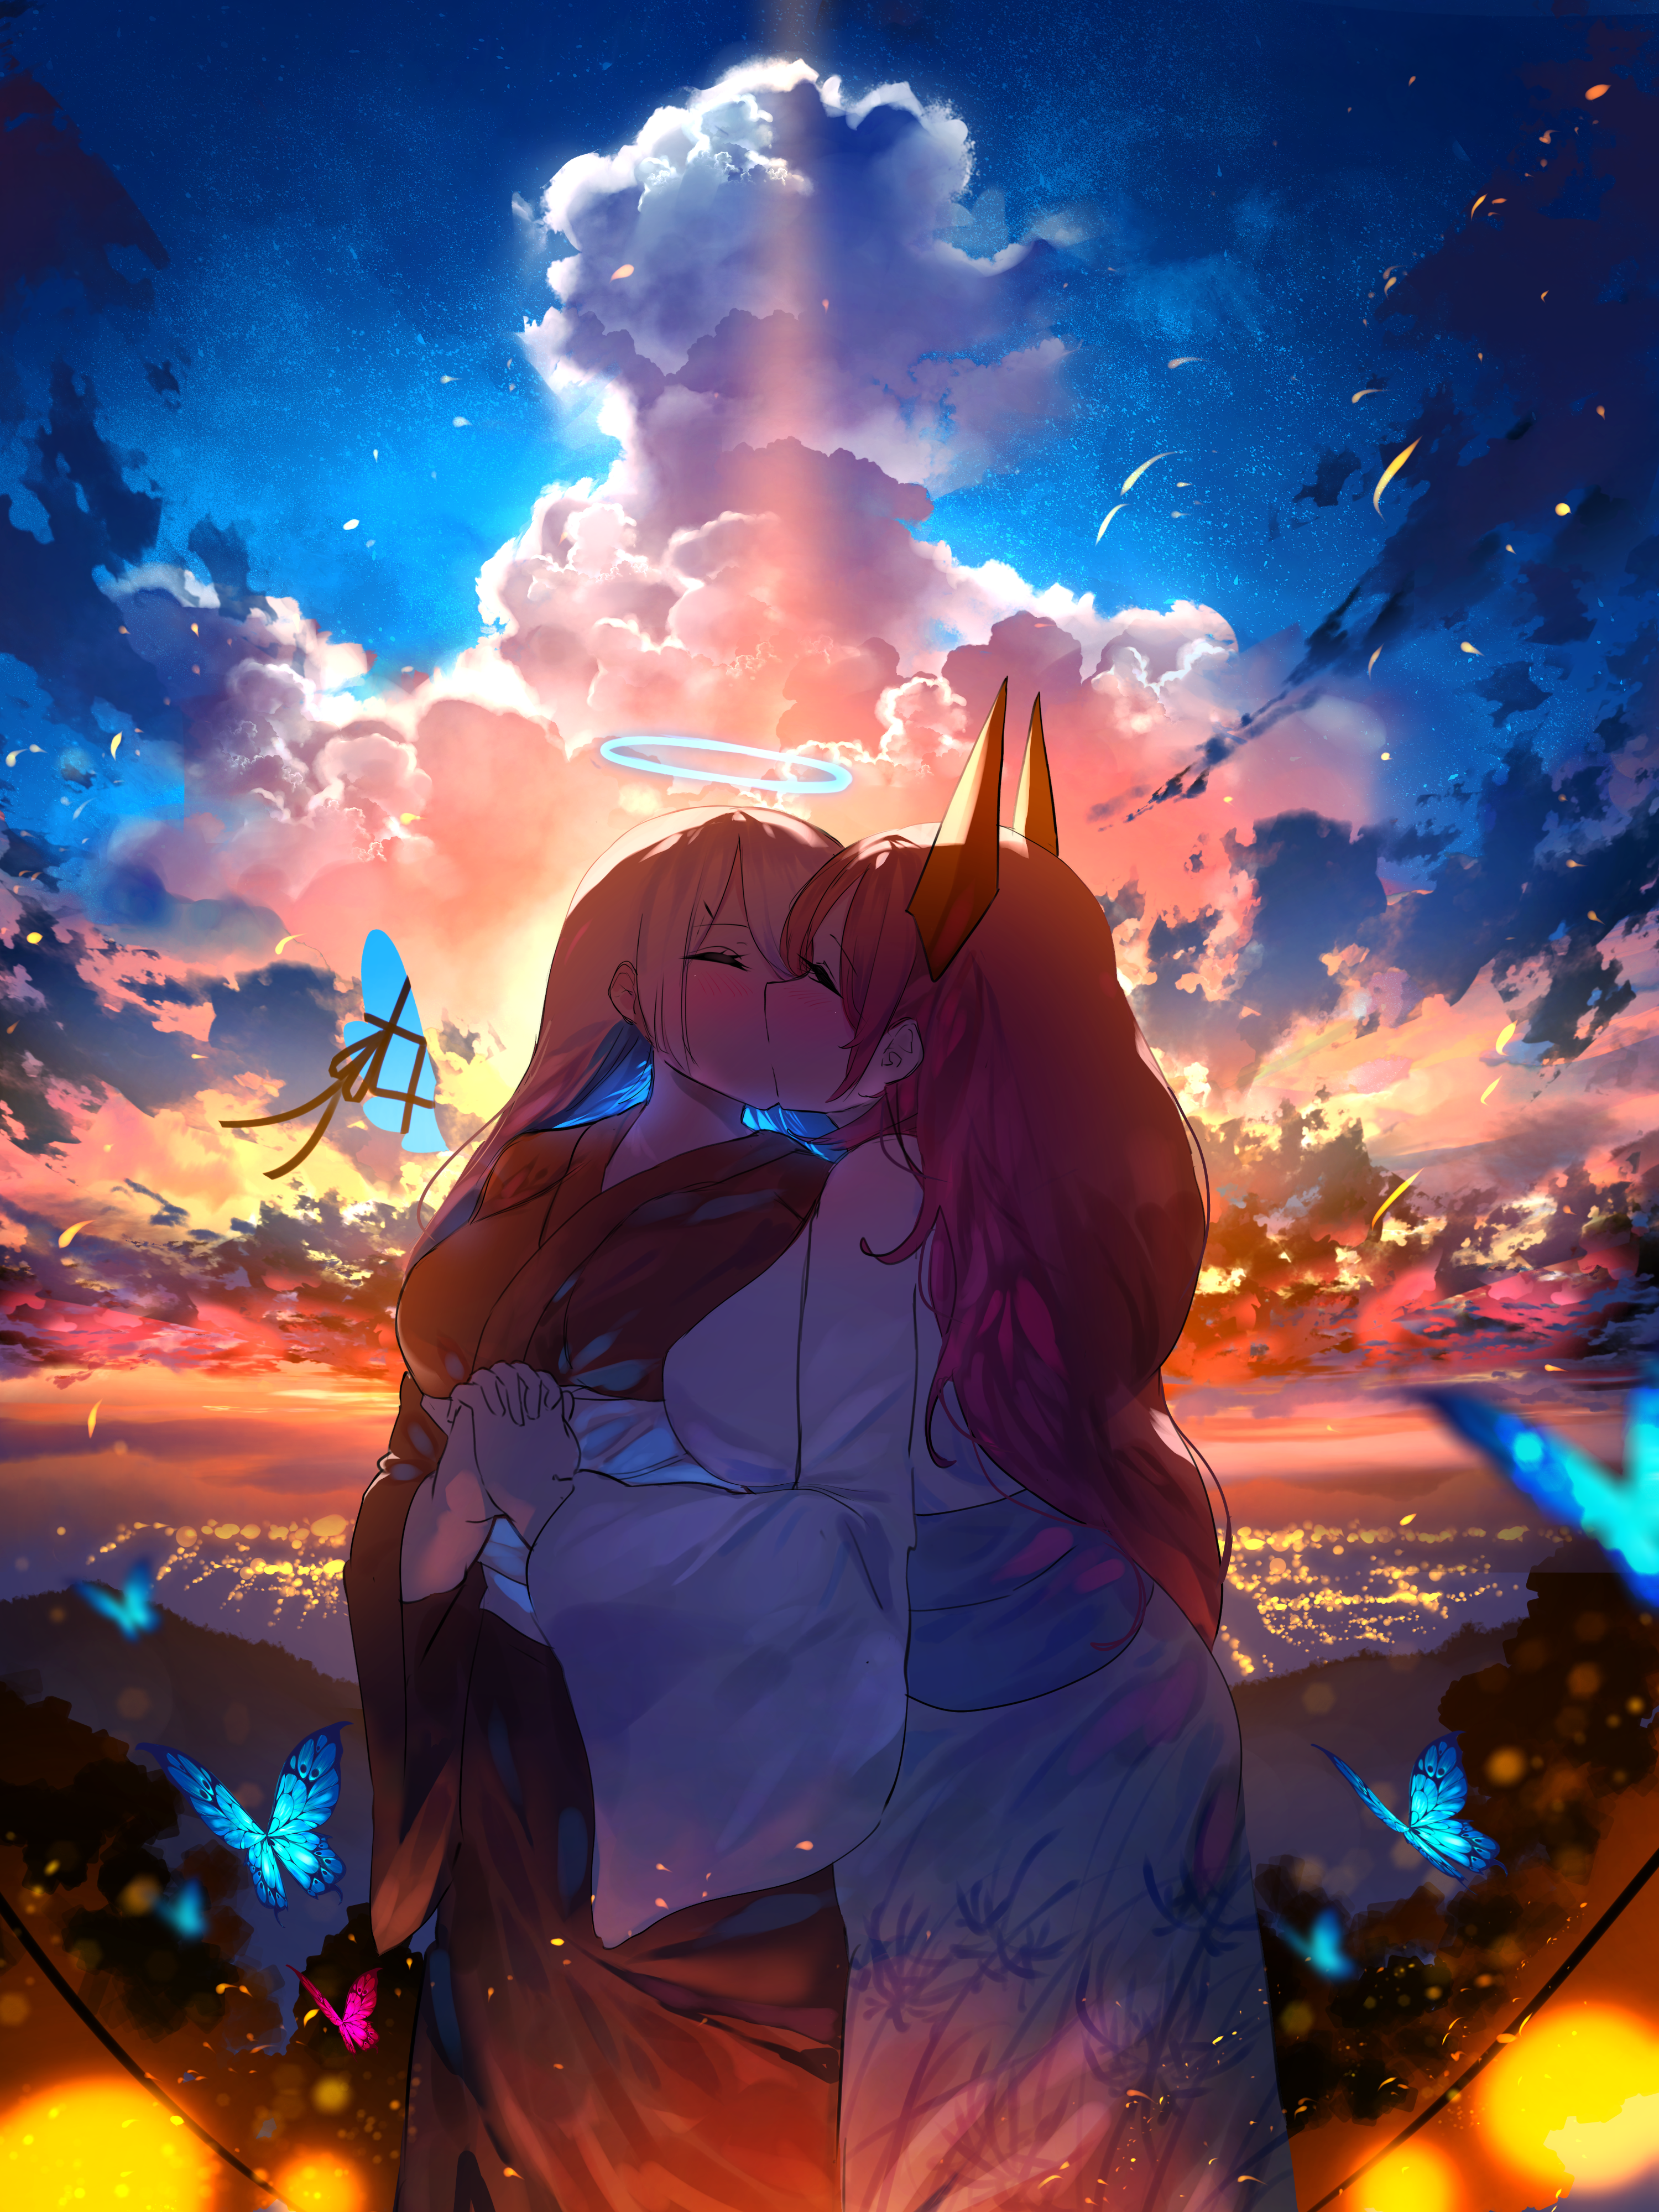 Anime 3000x4000 Pixiv anime girls yuri W (artist) kissing portrait display lesbians closed eyes sky clouds butterfly kimono sunlight long hair holding hands